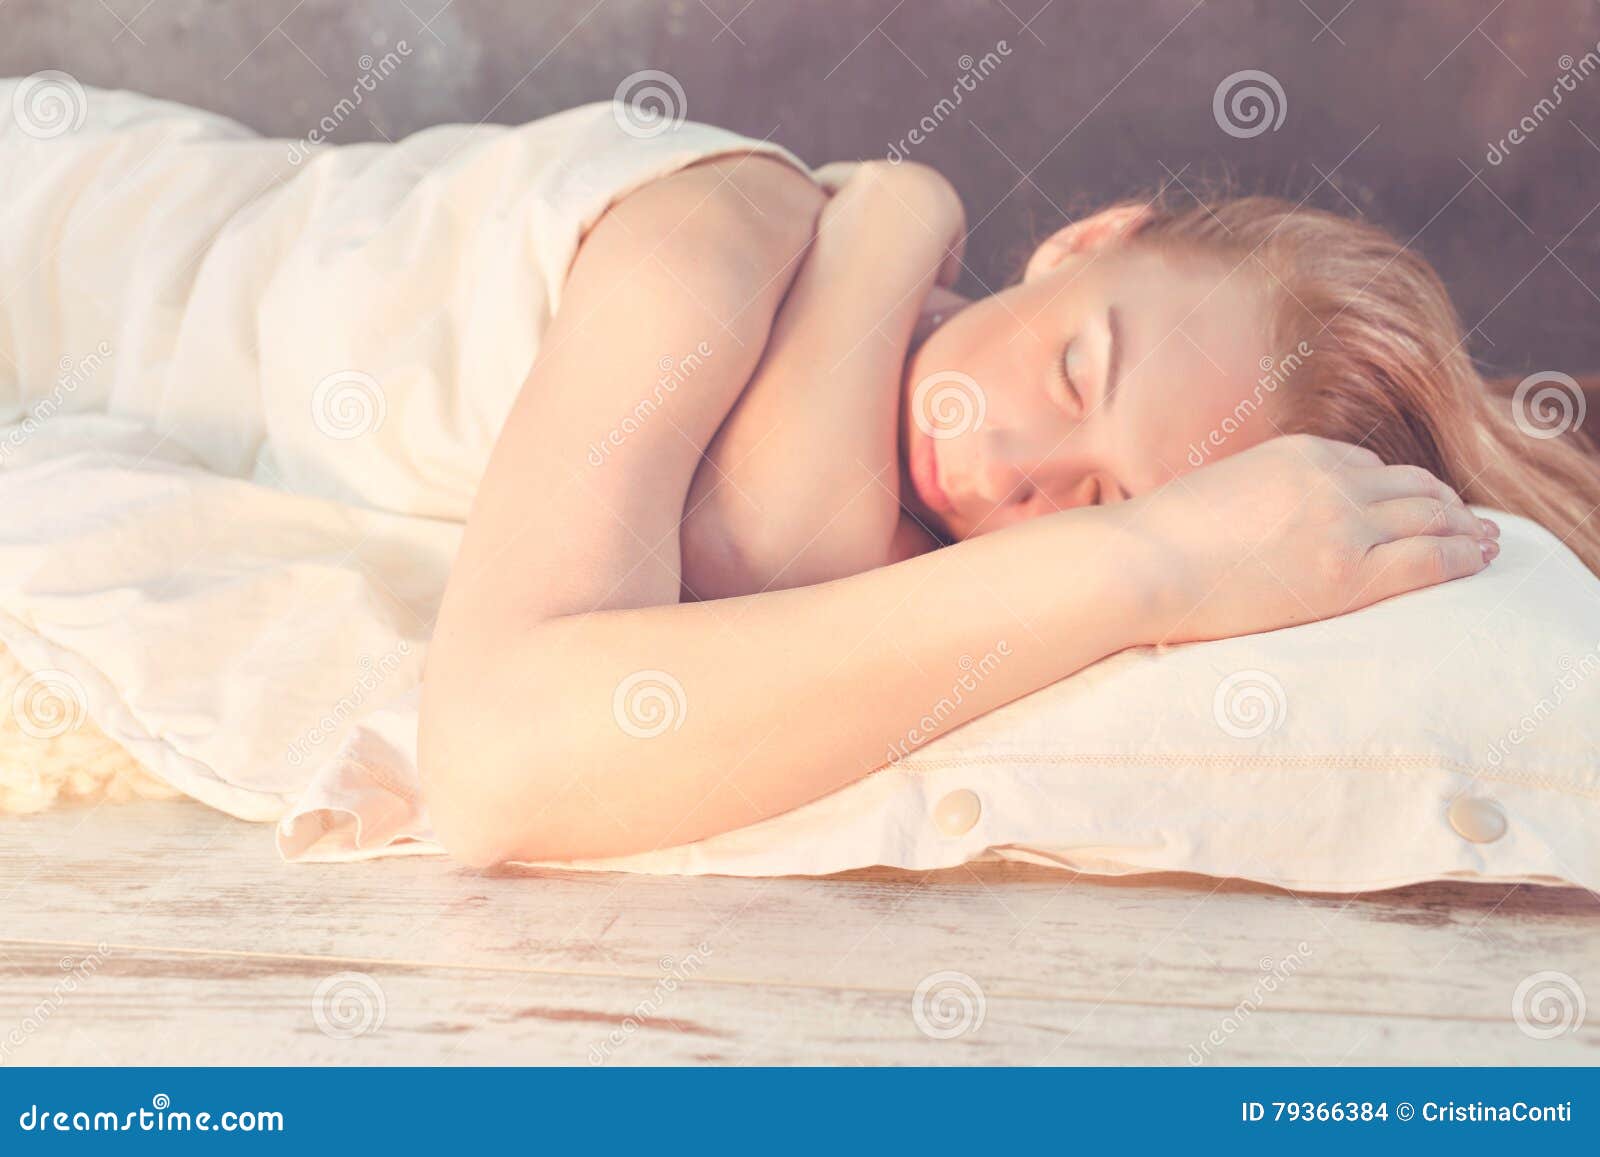 morning light illuminates woman sleeping in bed